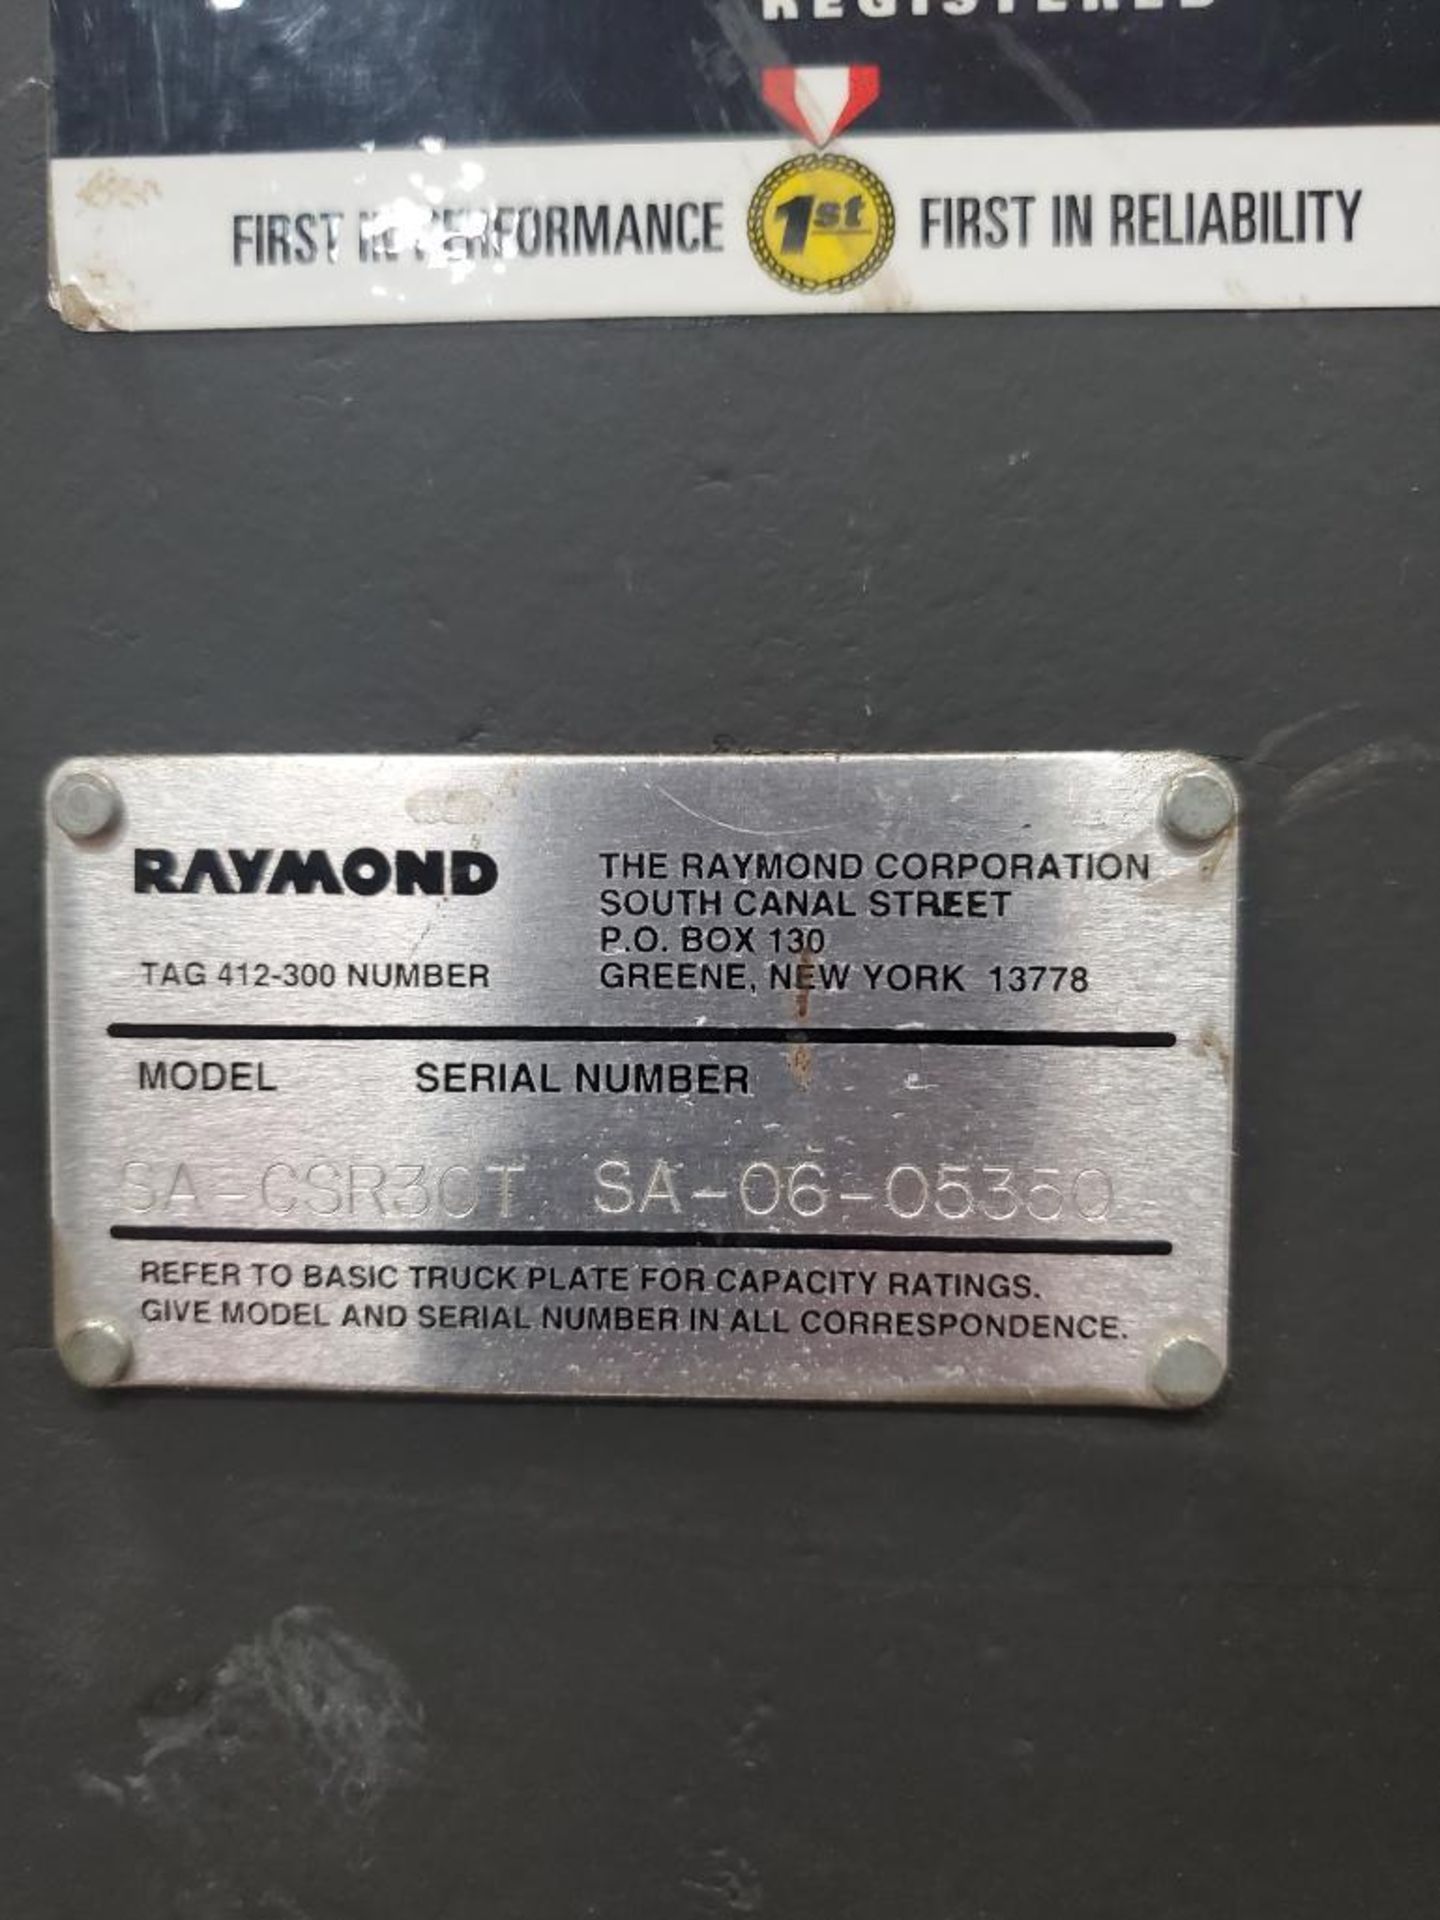 2006 RAYMOND 3,000 LB. CAPACITY SWING REACH TURRET TRUCK; MODEL SA-CSR30T, S/N SA-06-05350, 48- - Image 10 of 10